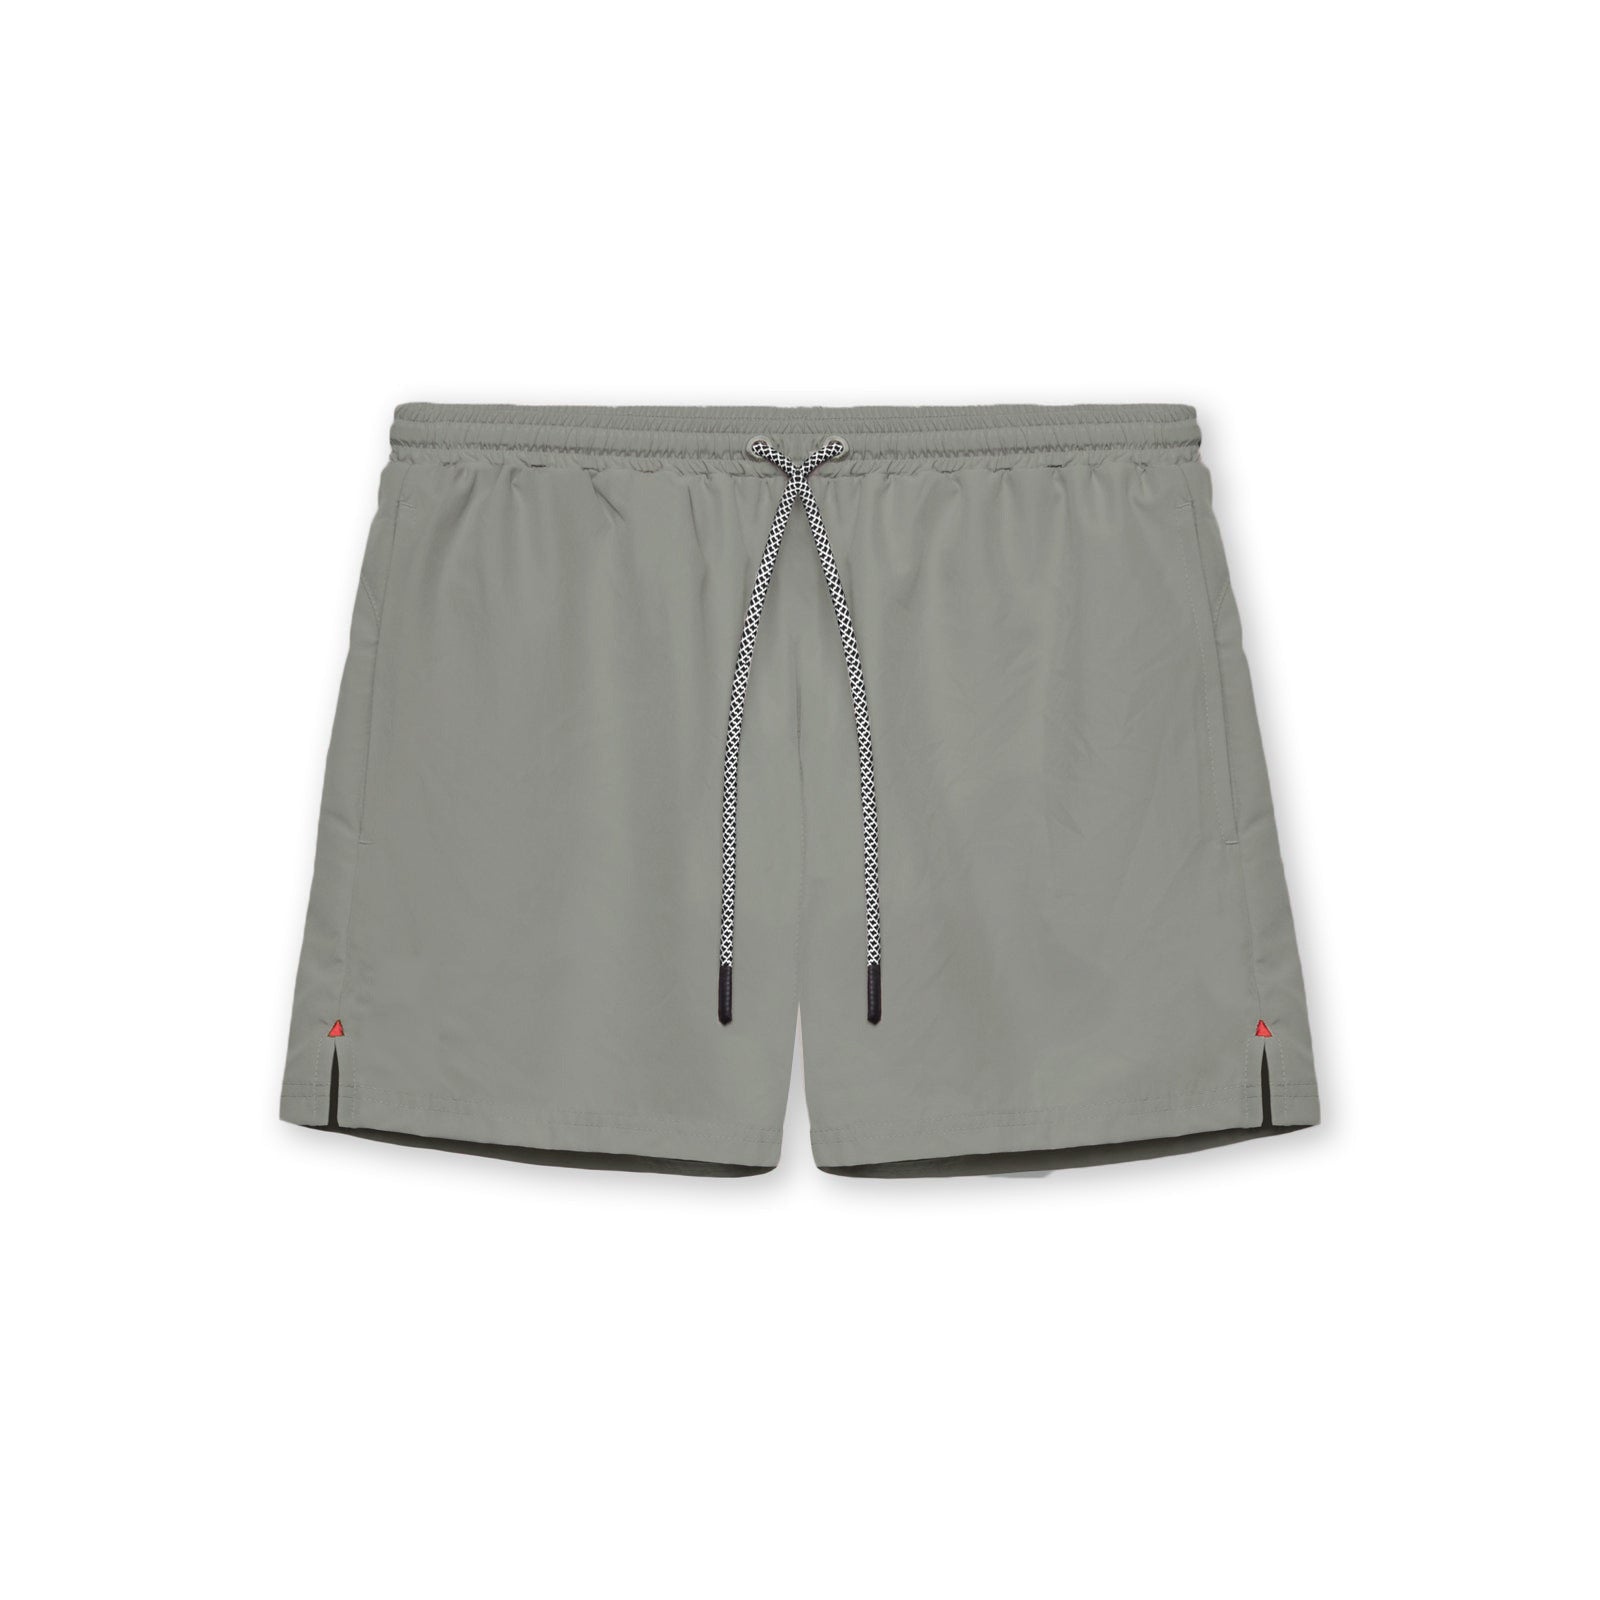 ALLRJ Shorts Light Plate Light Carbon Gray / L Muscle Workout Summer Sports Casual Basketball Men's Running Training Wear Shorts